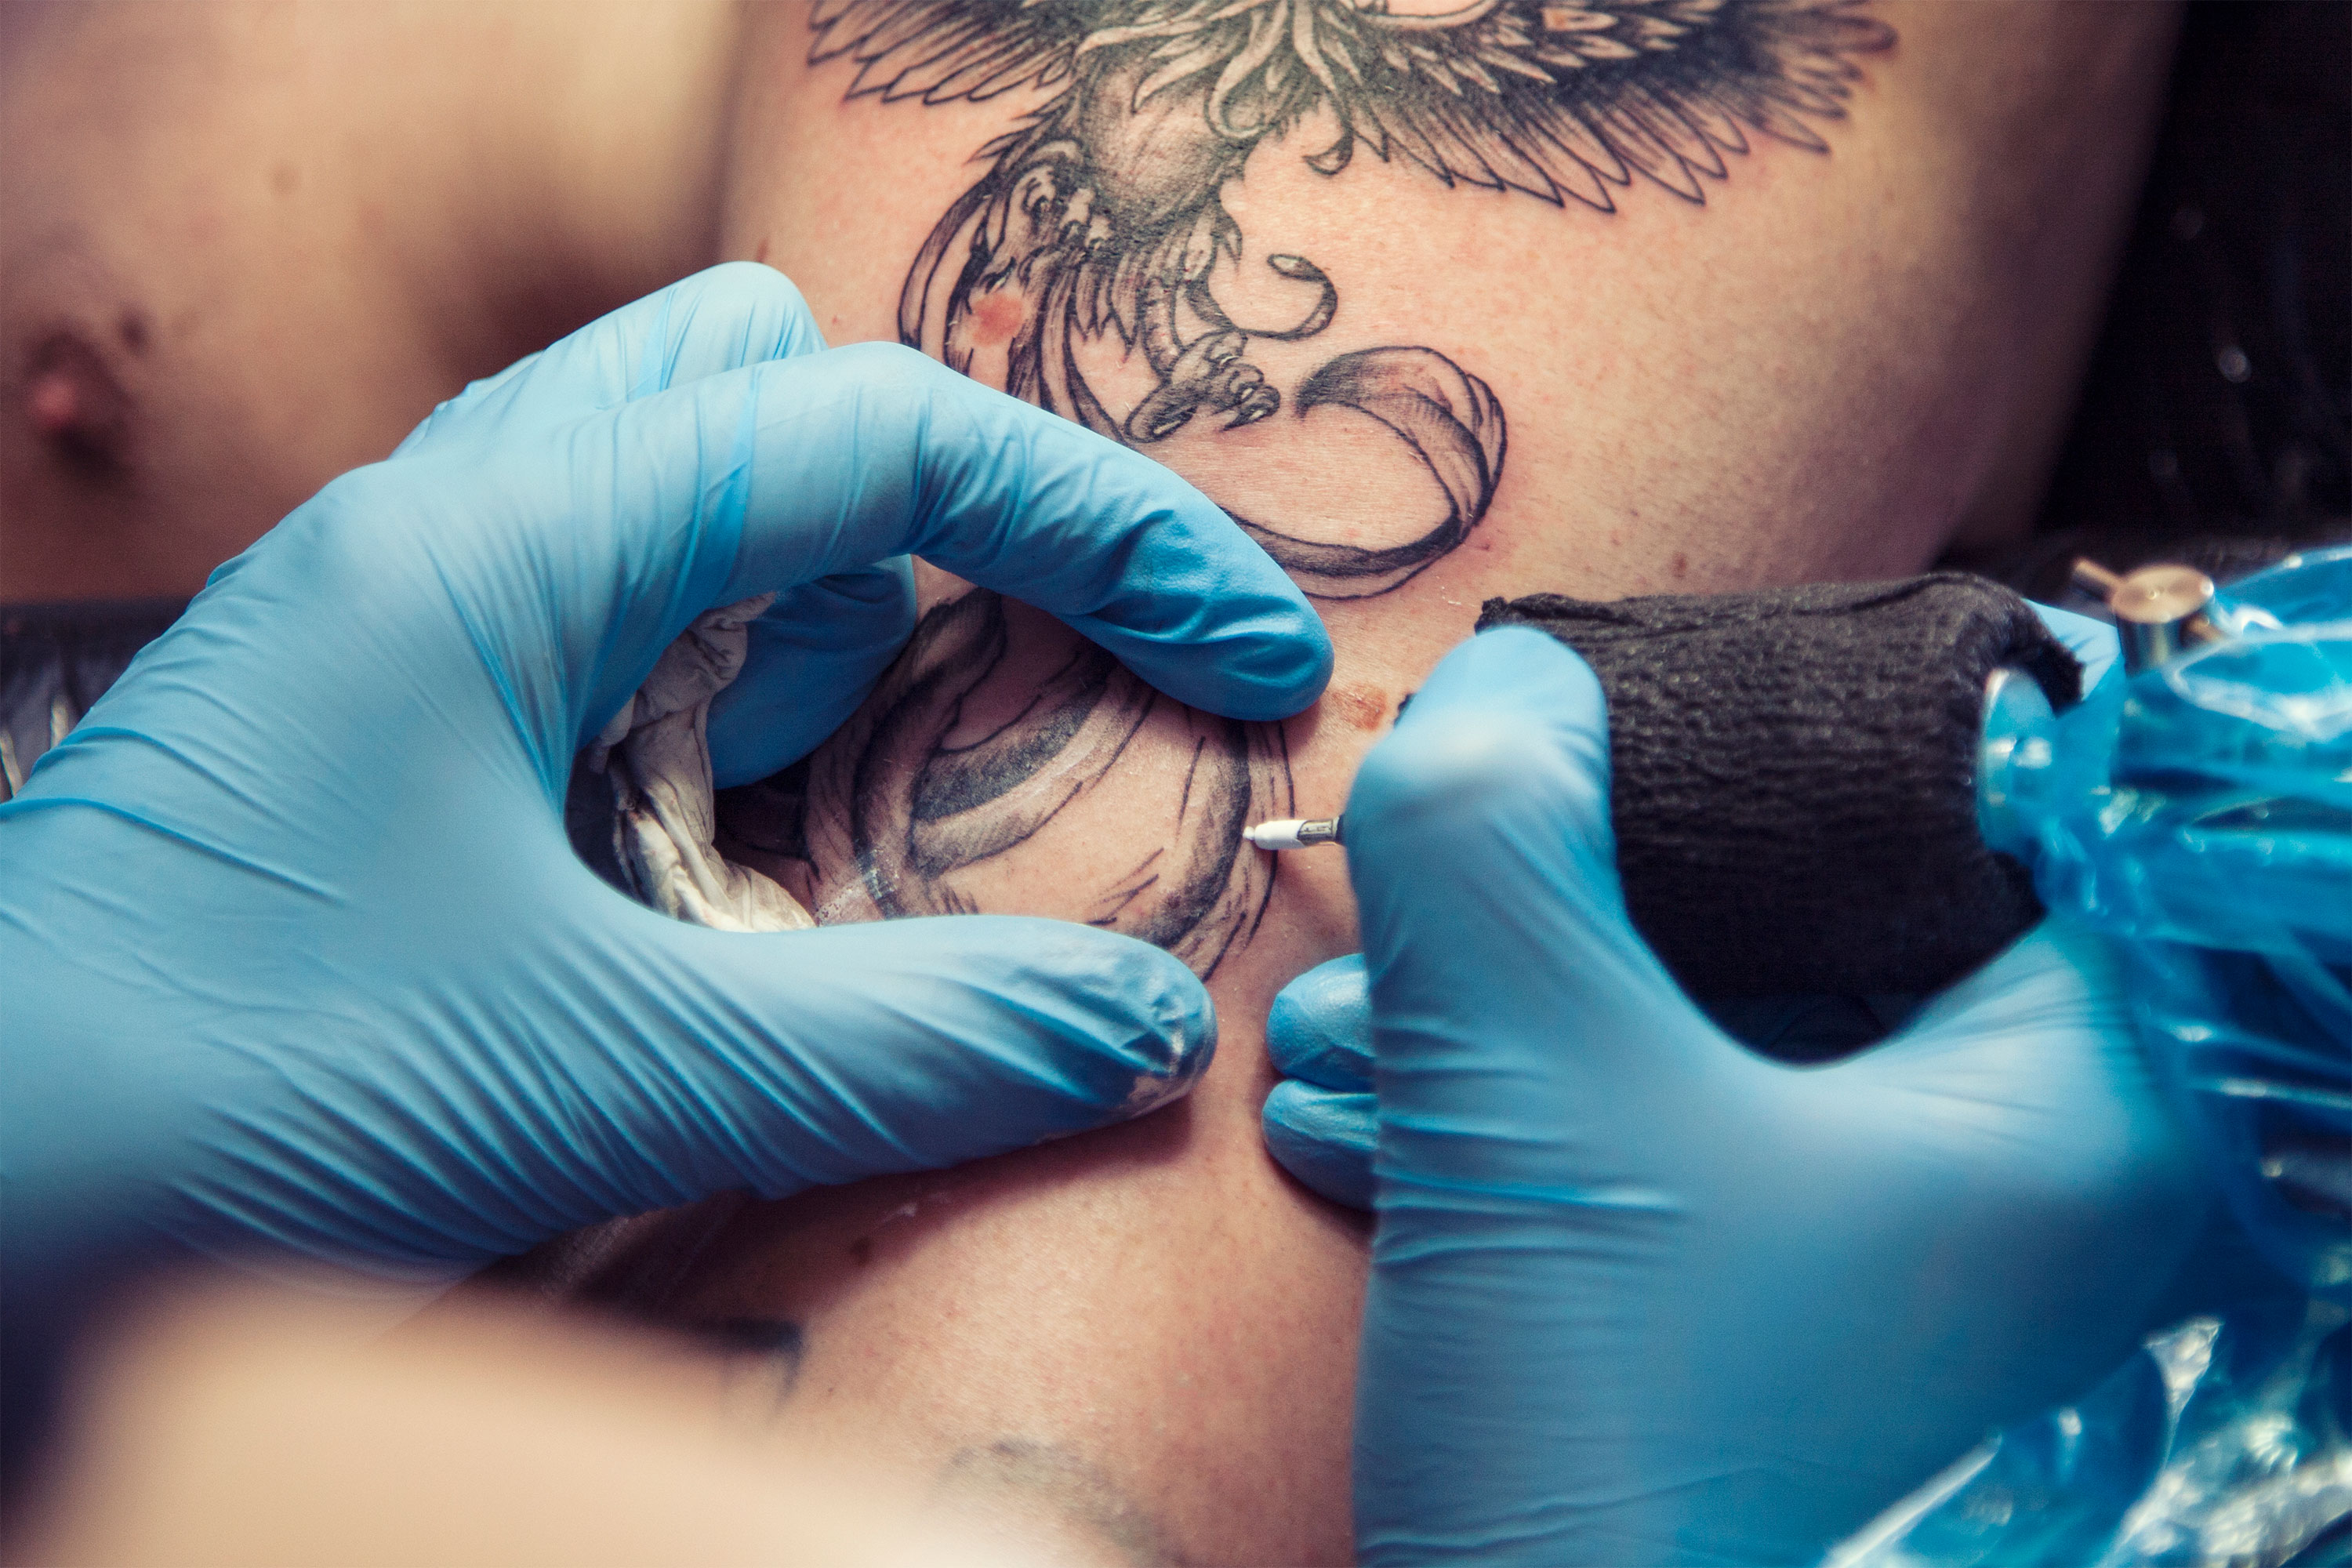 Can Tattoos Make Melanoma Harder to Detect?